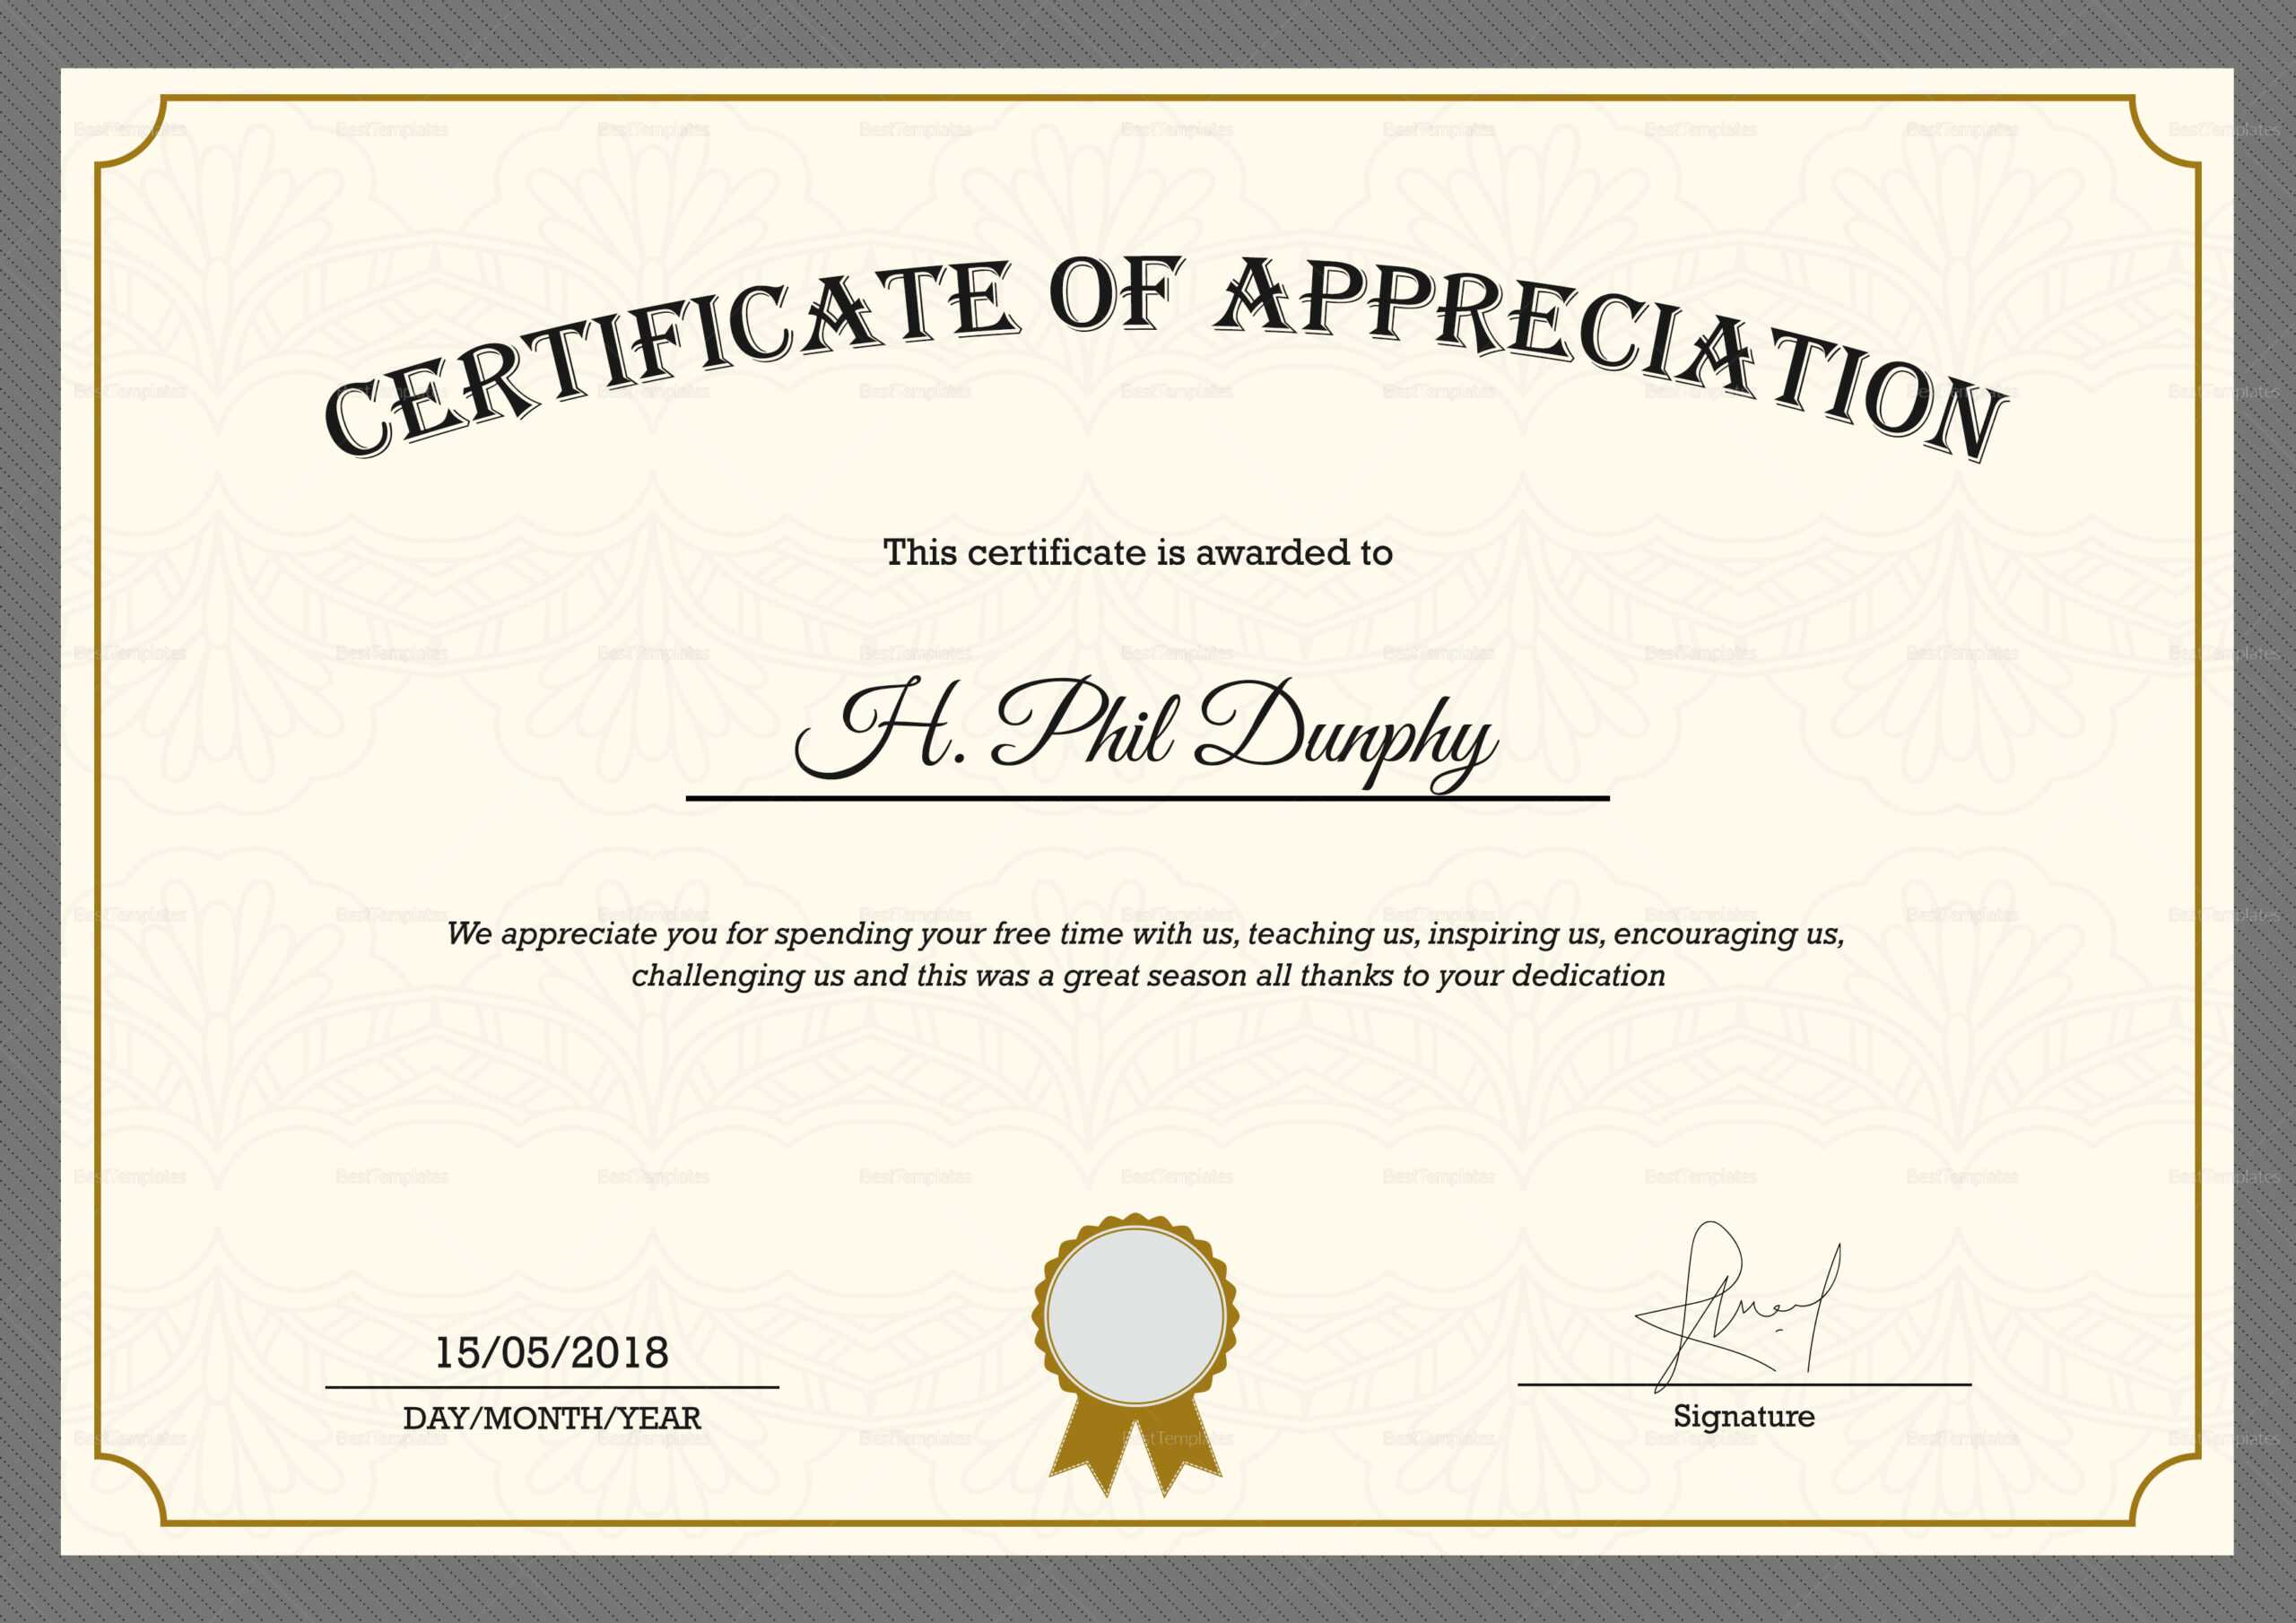 Sample Company Appreciation Certificate Template With In Appreciation Certificate Templates